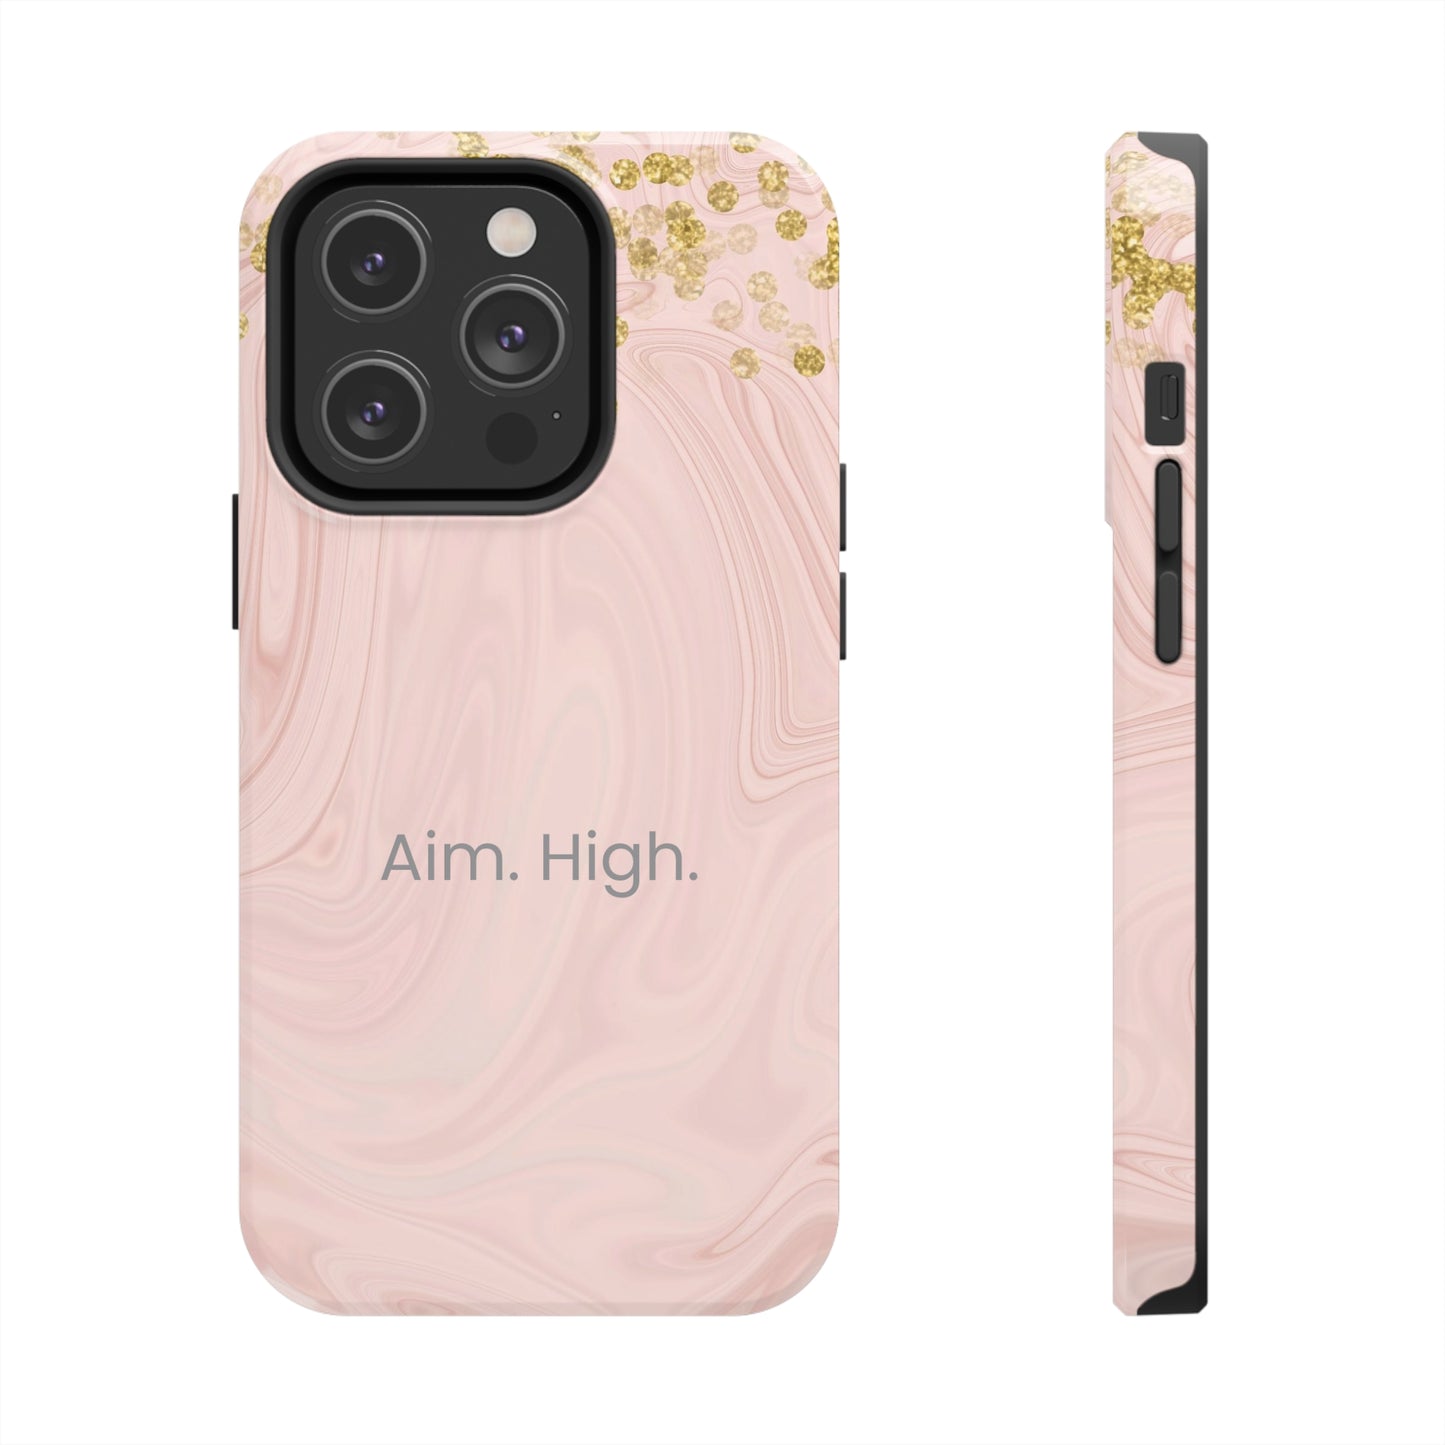 Aim. High. / Sparkle Rose Gold iPhone Case